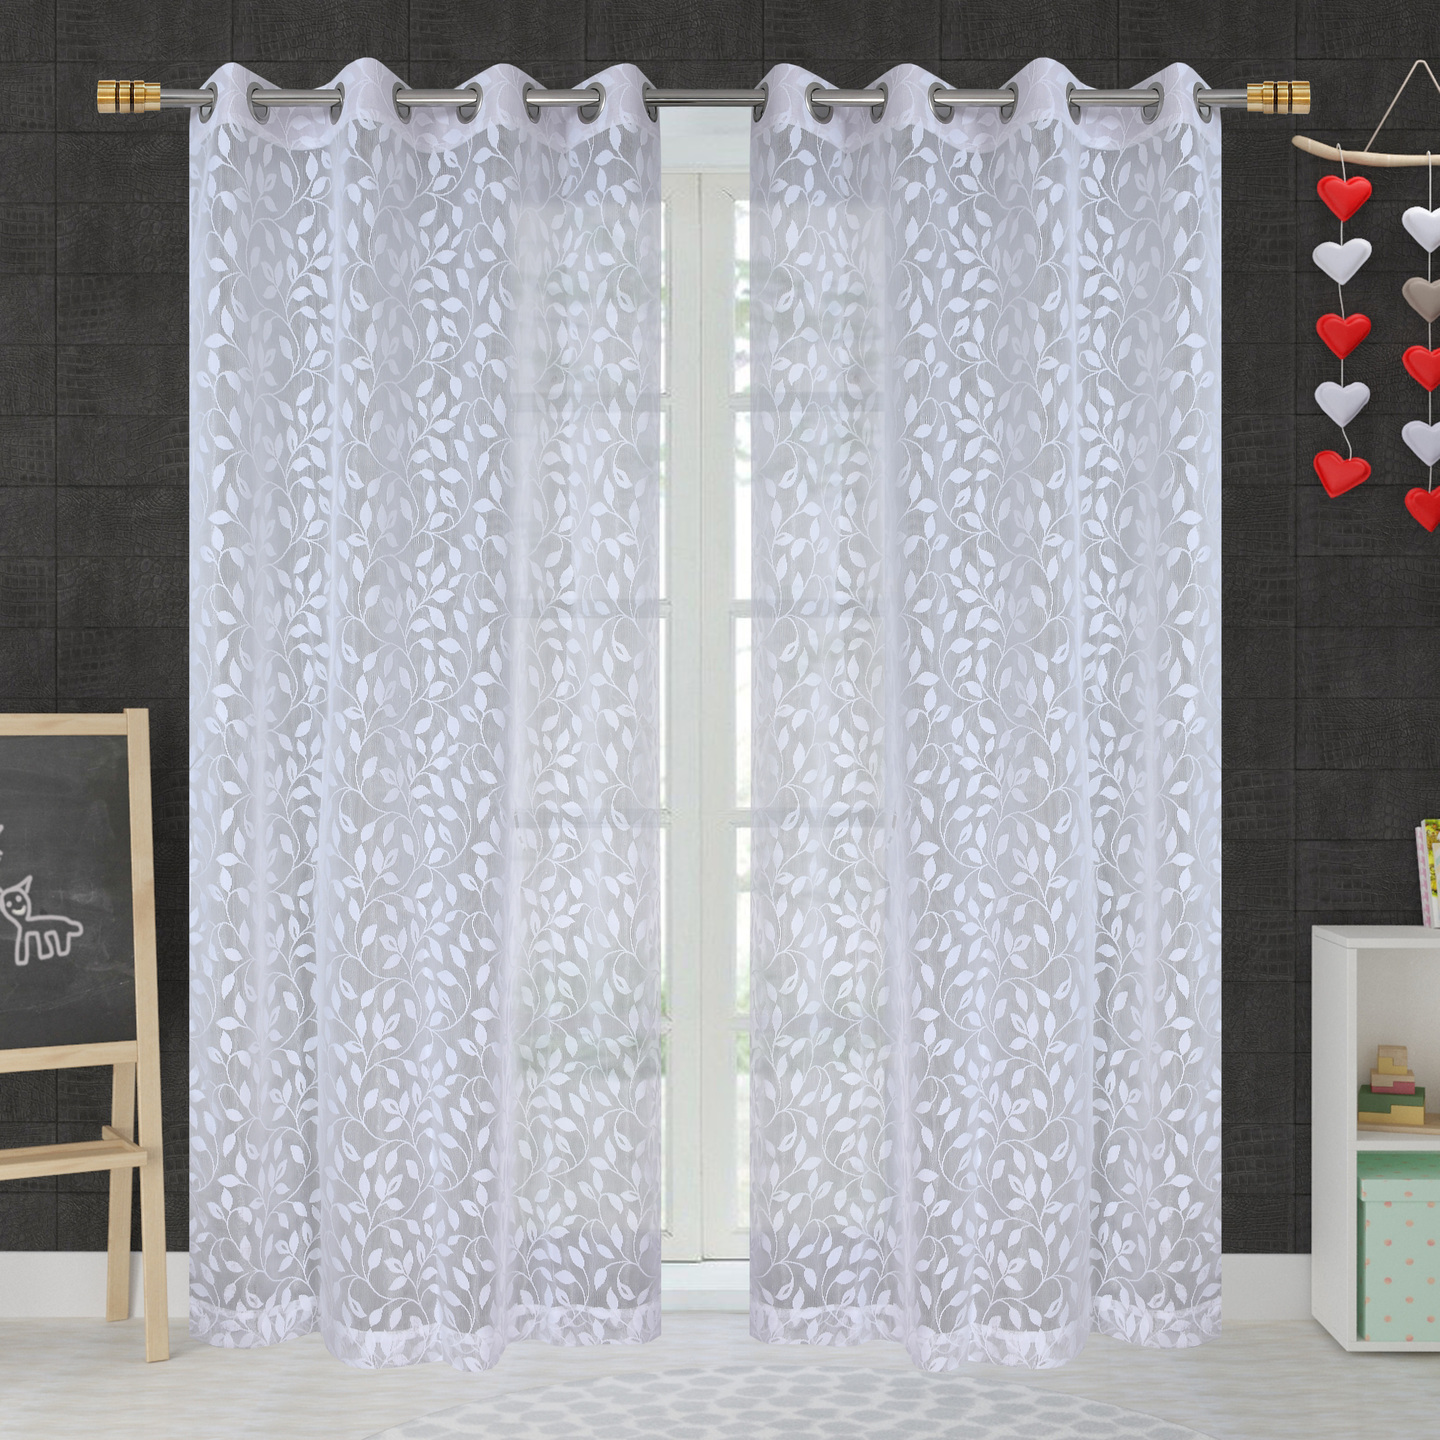 Handtex Home Net door curtain 4 feet x 7 feet White set of 2 pc